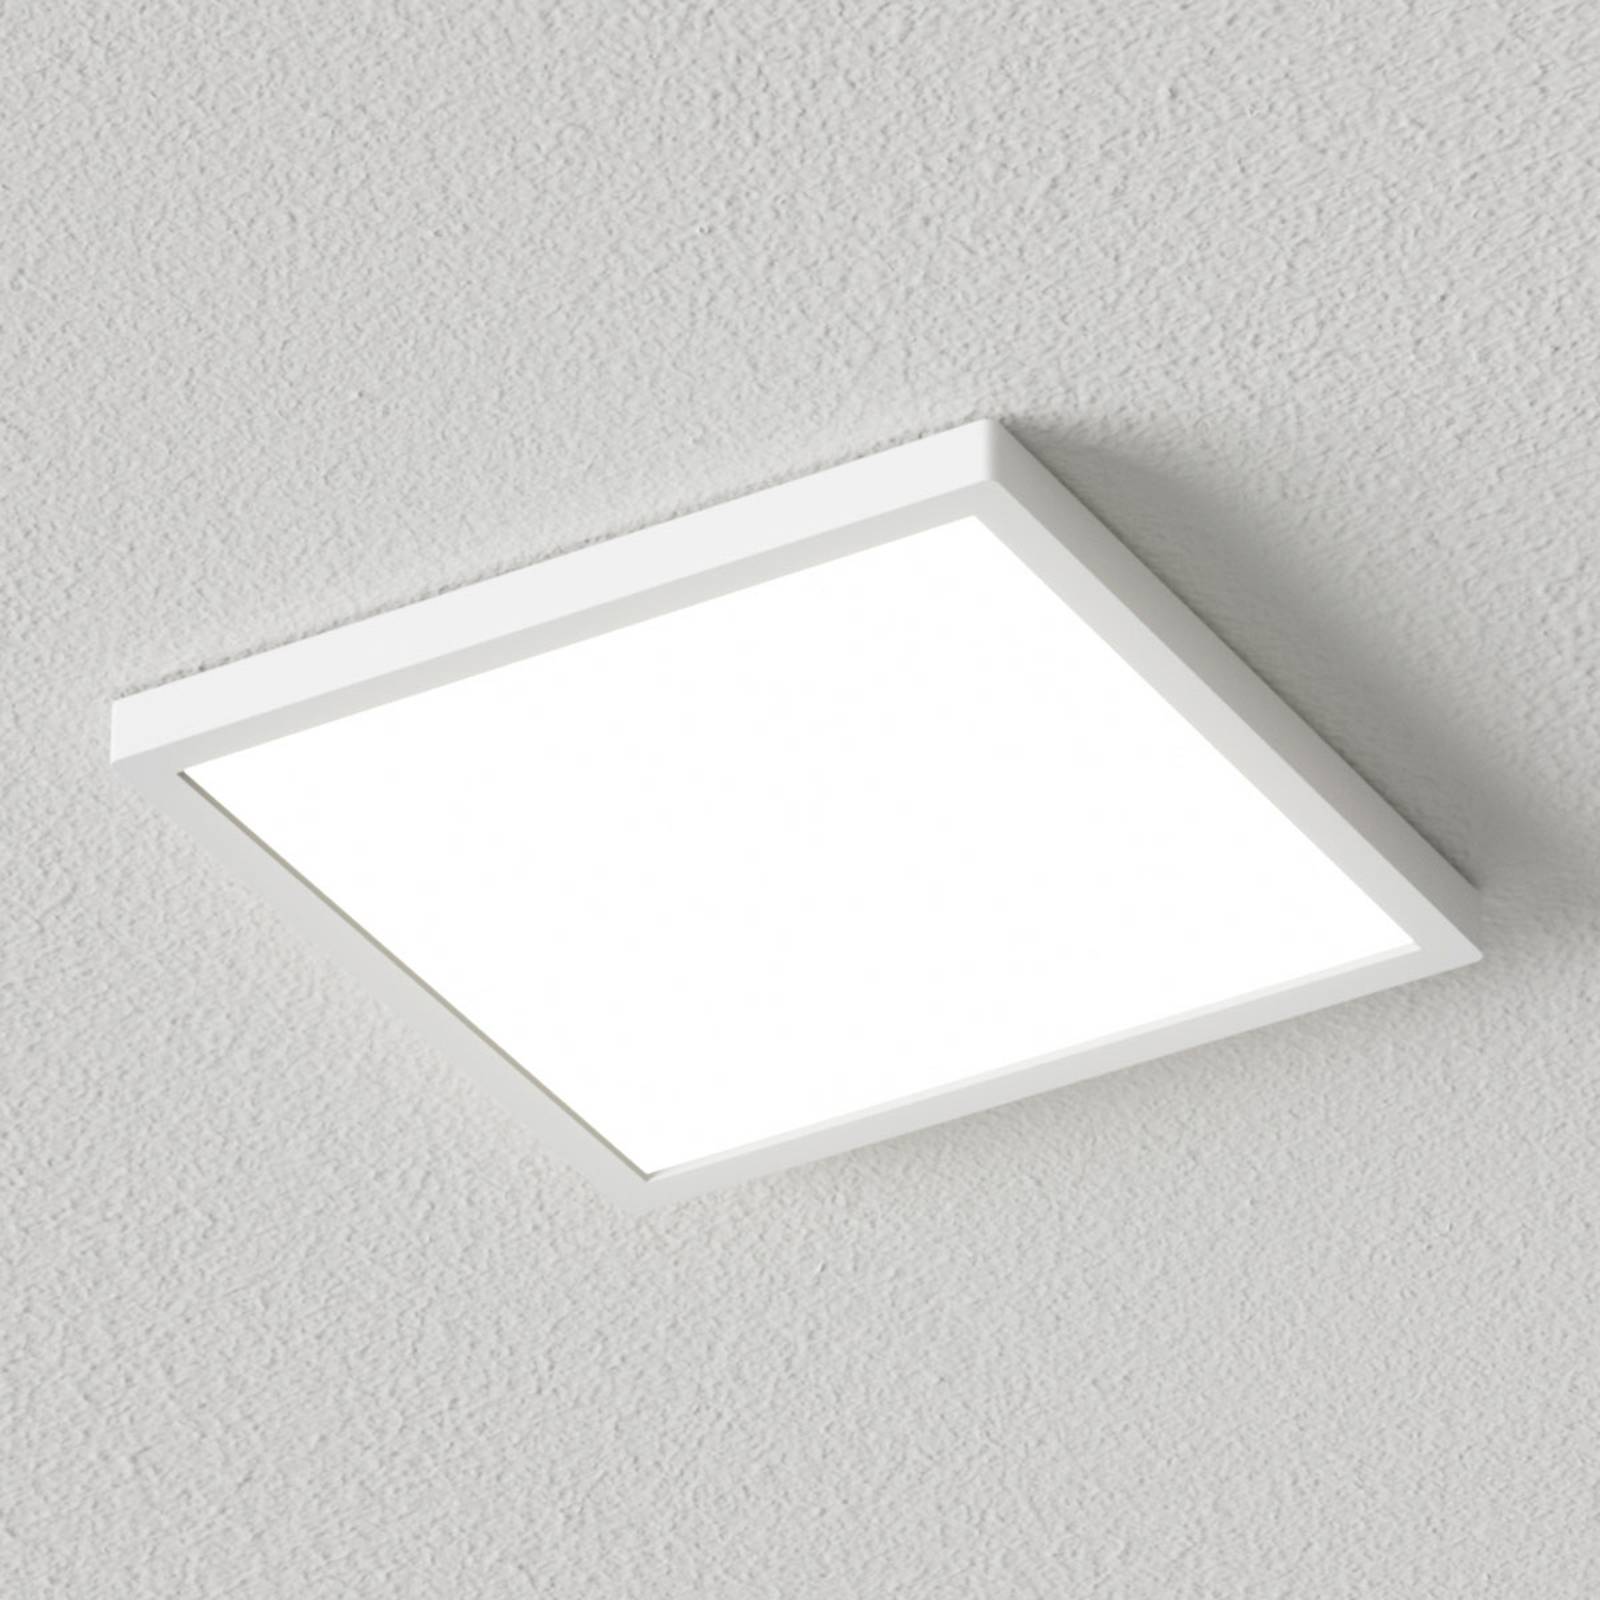 Biała, kanciasta lampa sufitowa LED Solvie